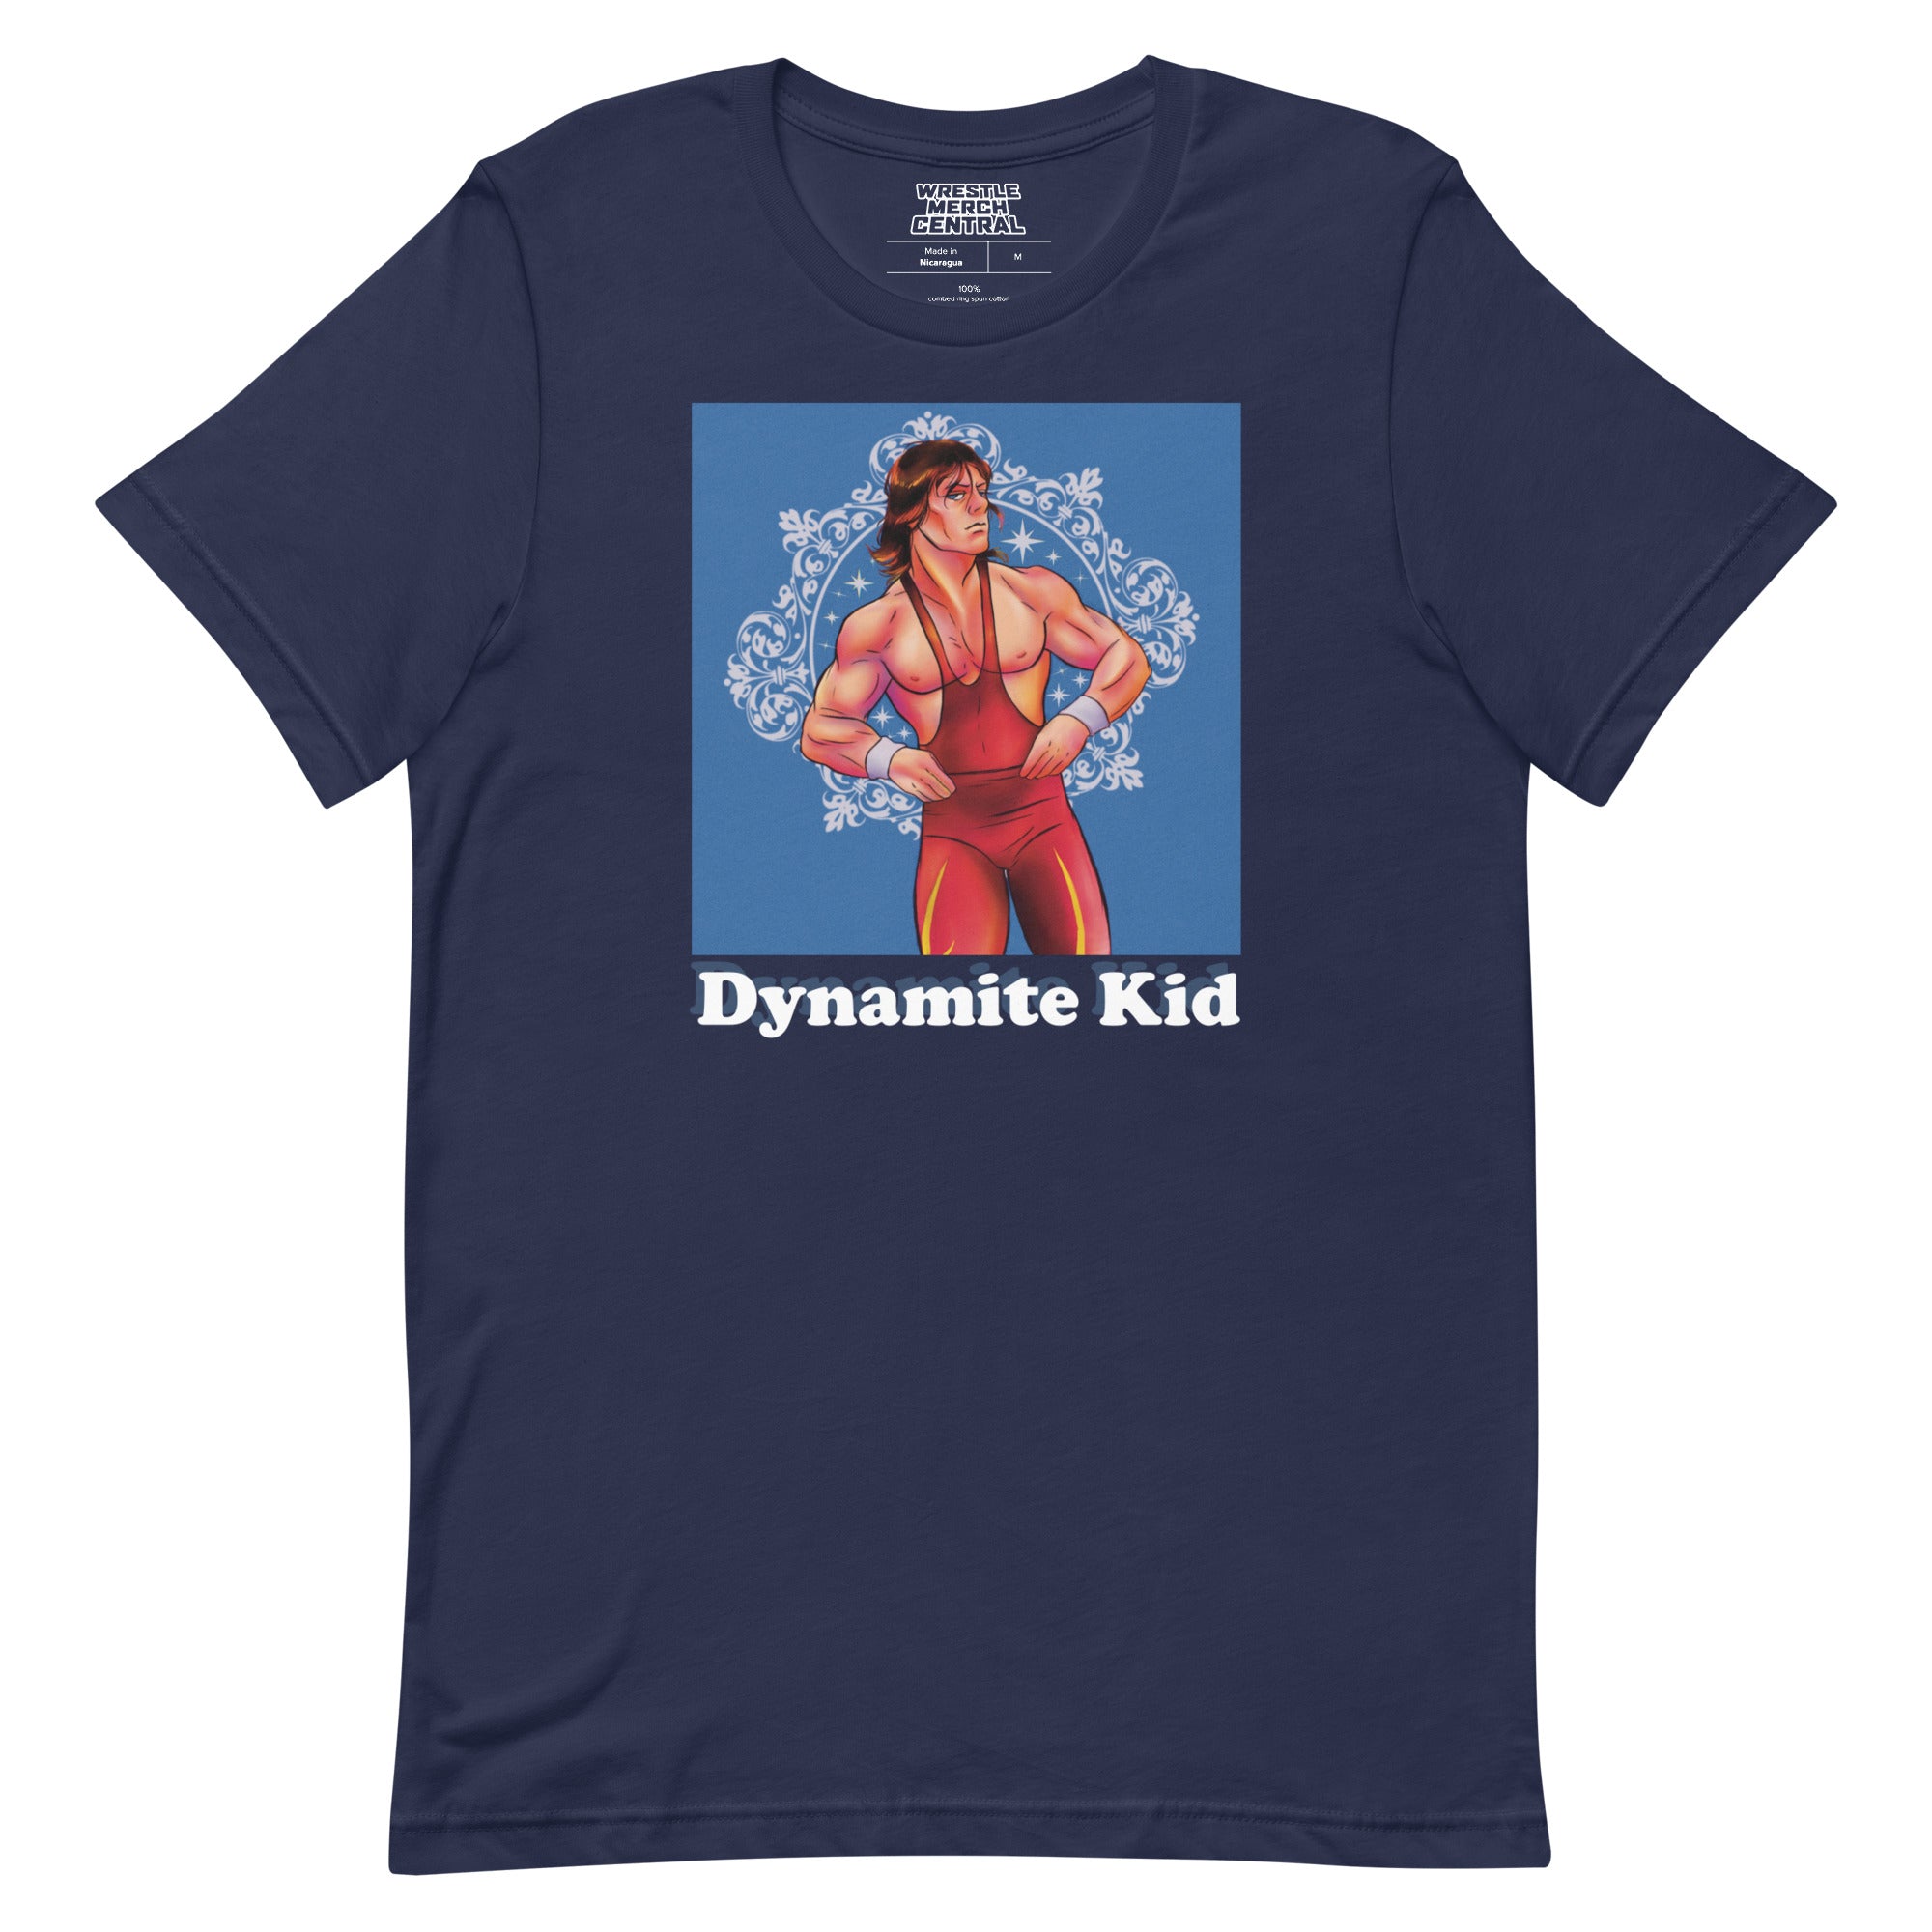 Dynamite Kid "Pose" Unisex T-Shirt